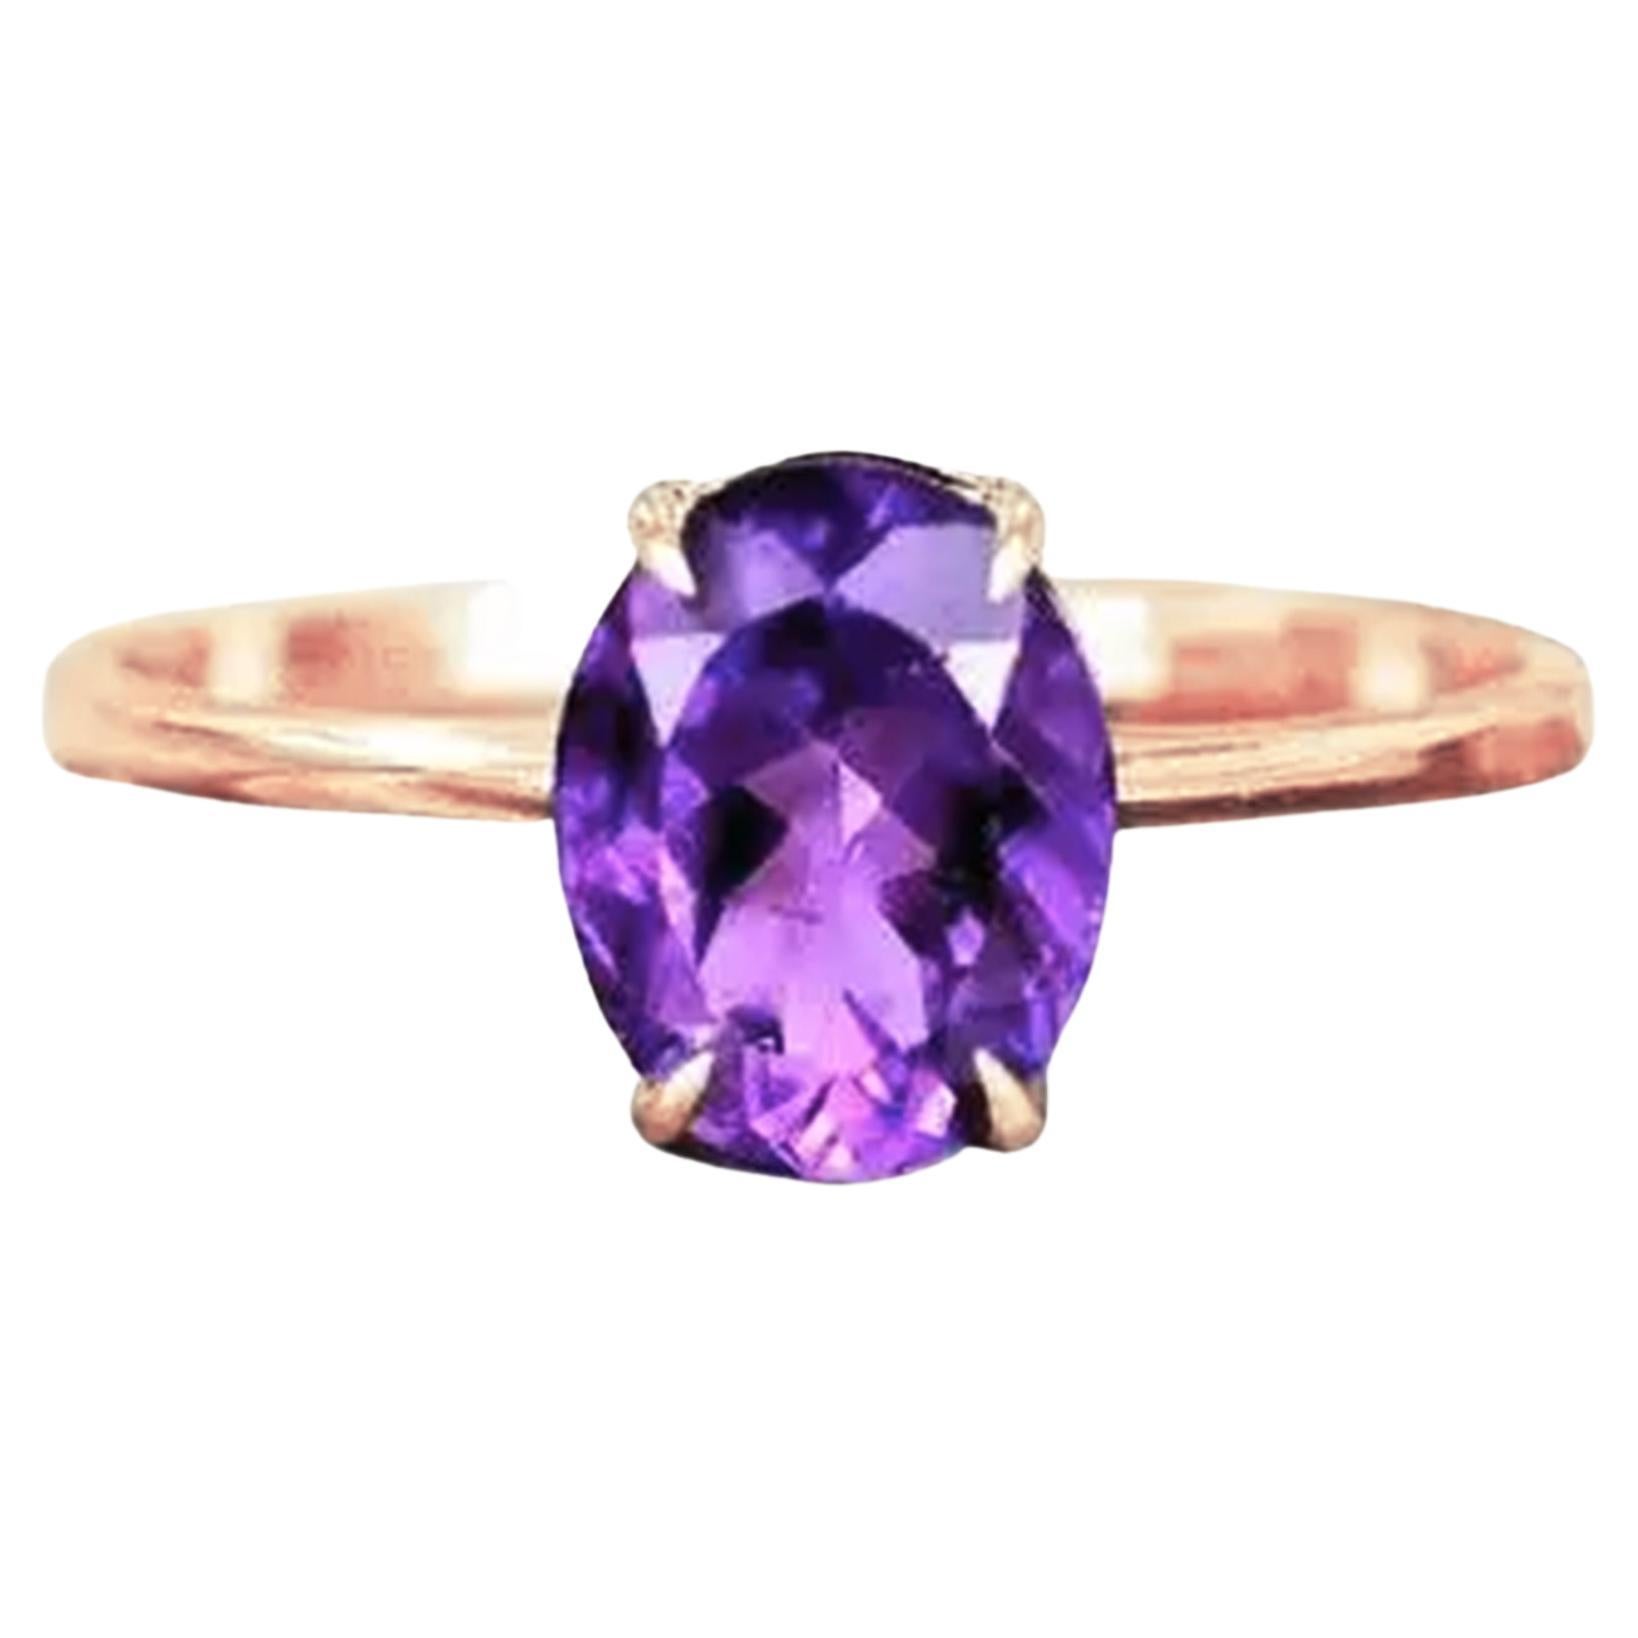 For Sale:  10k Gold Oval Gemstone 9x7 mm Oval Cut Gemstone Ring Gemstone Engagement Ring